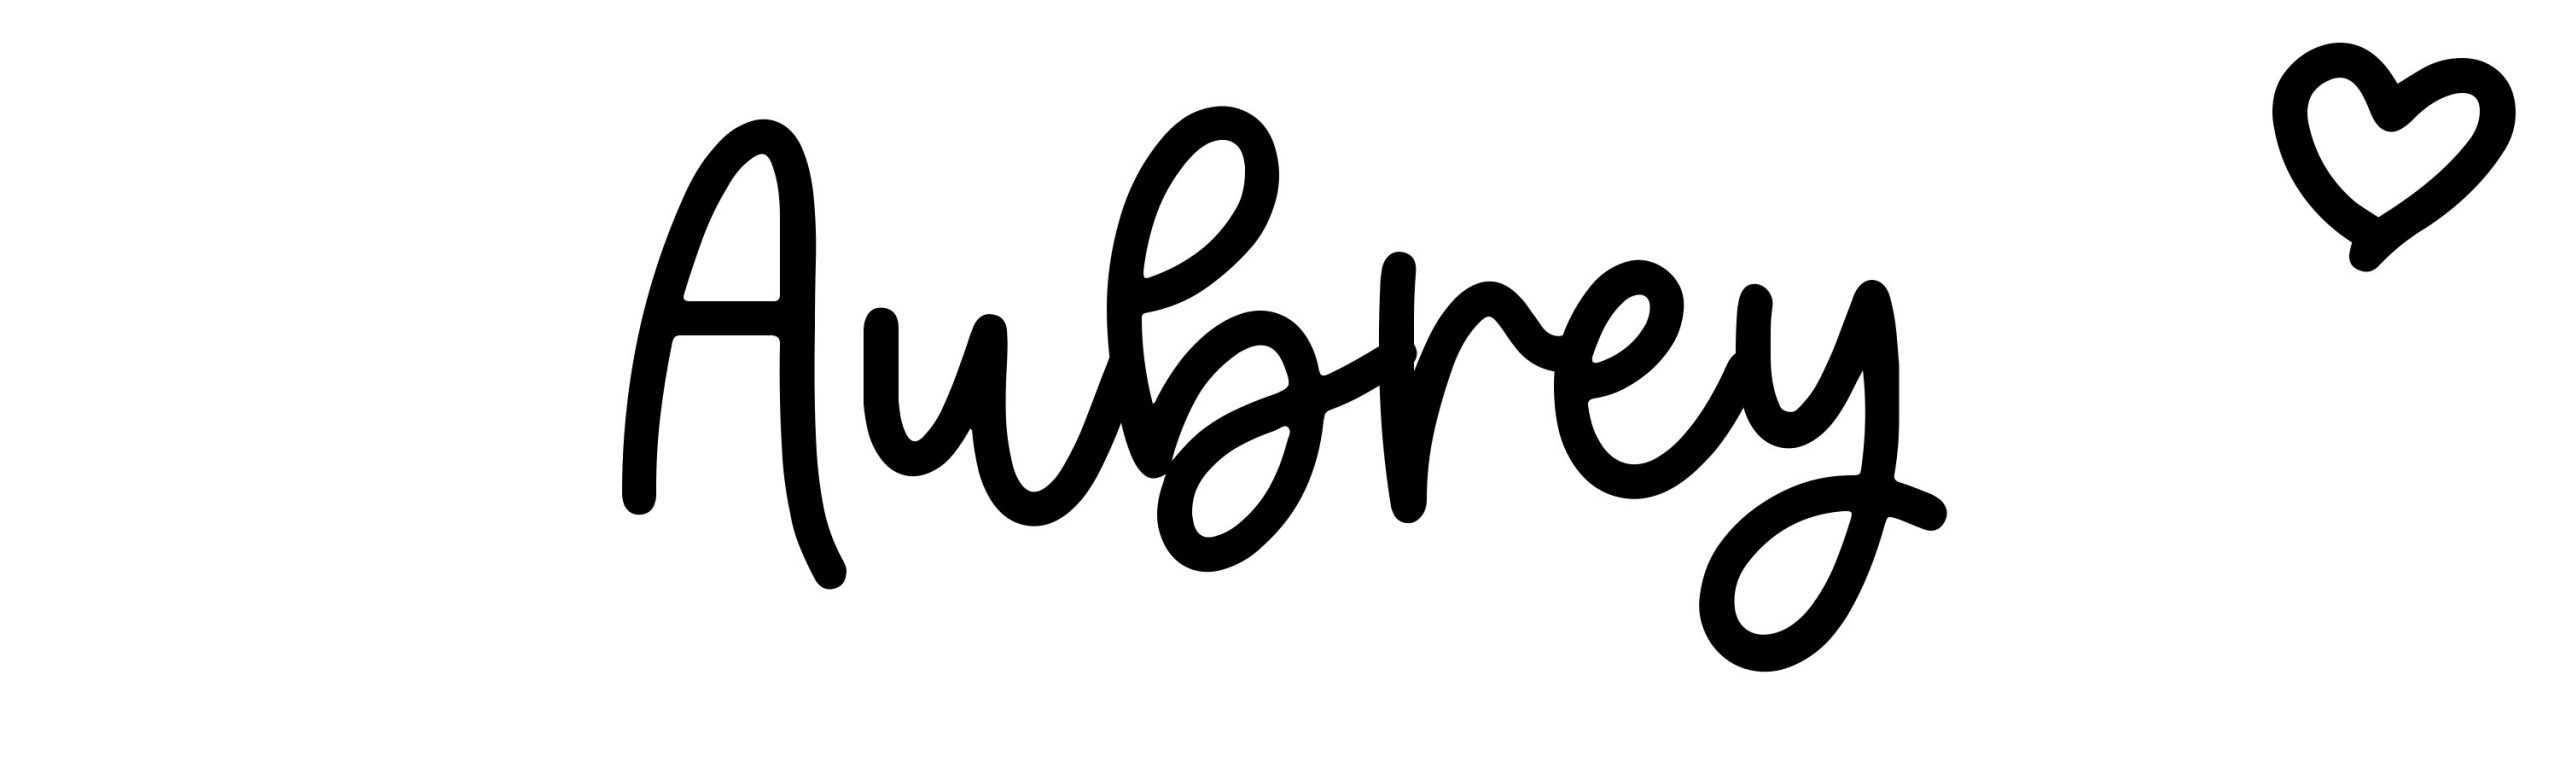 Aubrey Name  Sticker for Sale by ashleymanheim  Redbubble